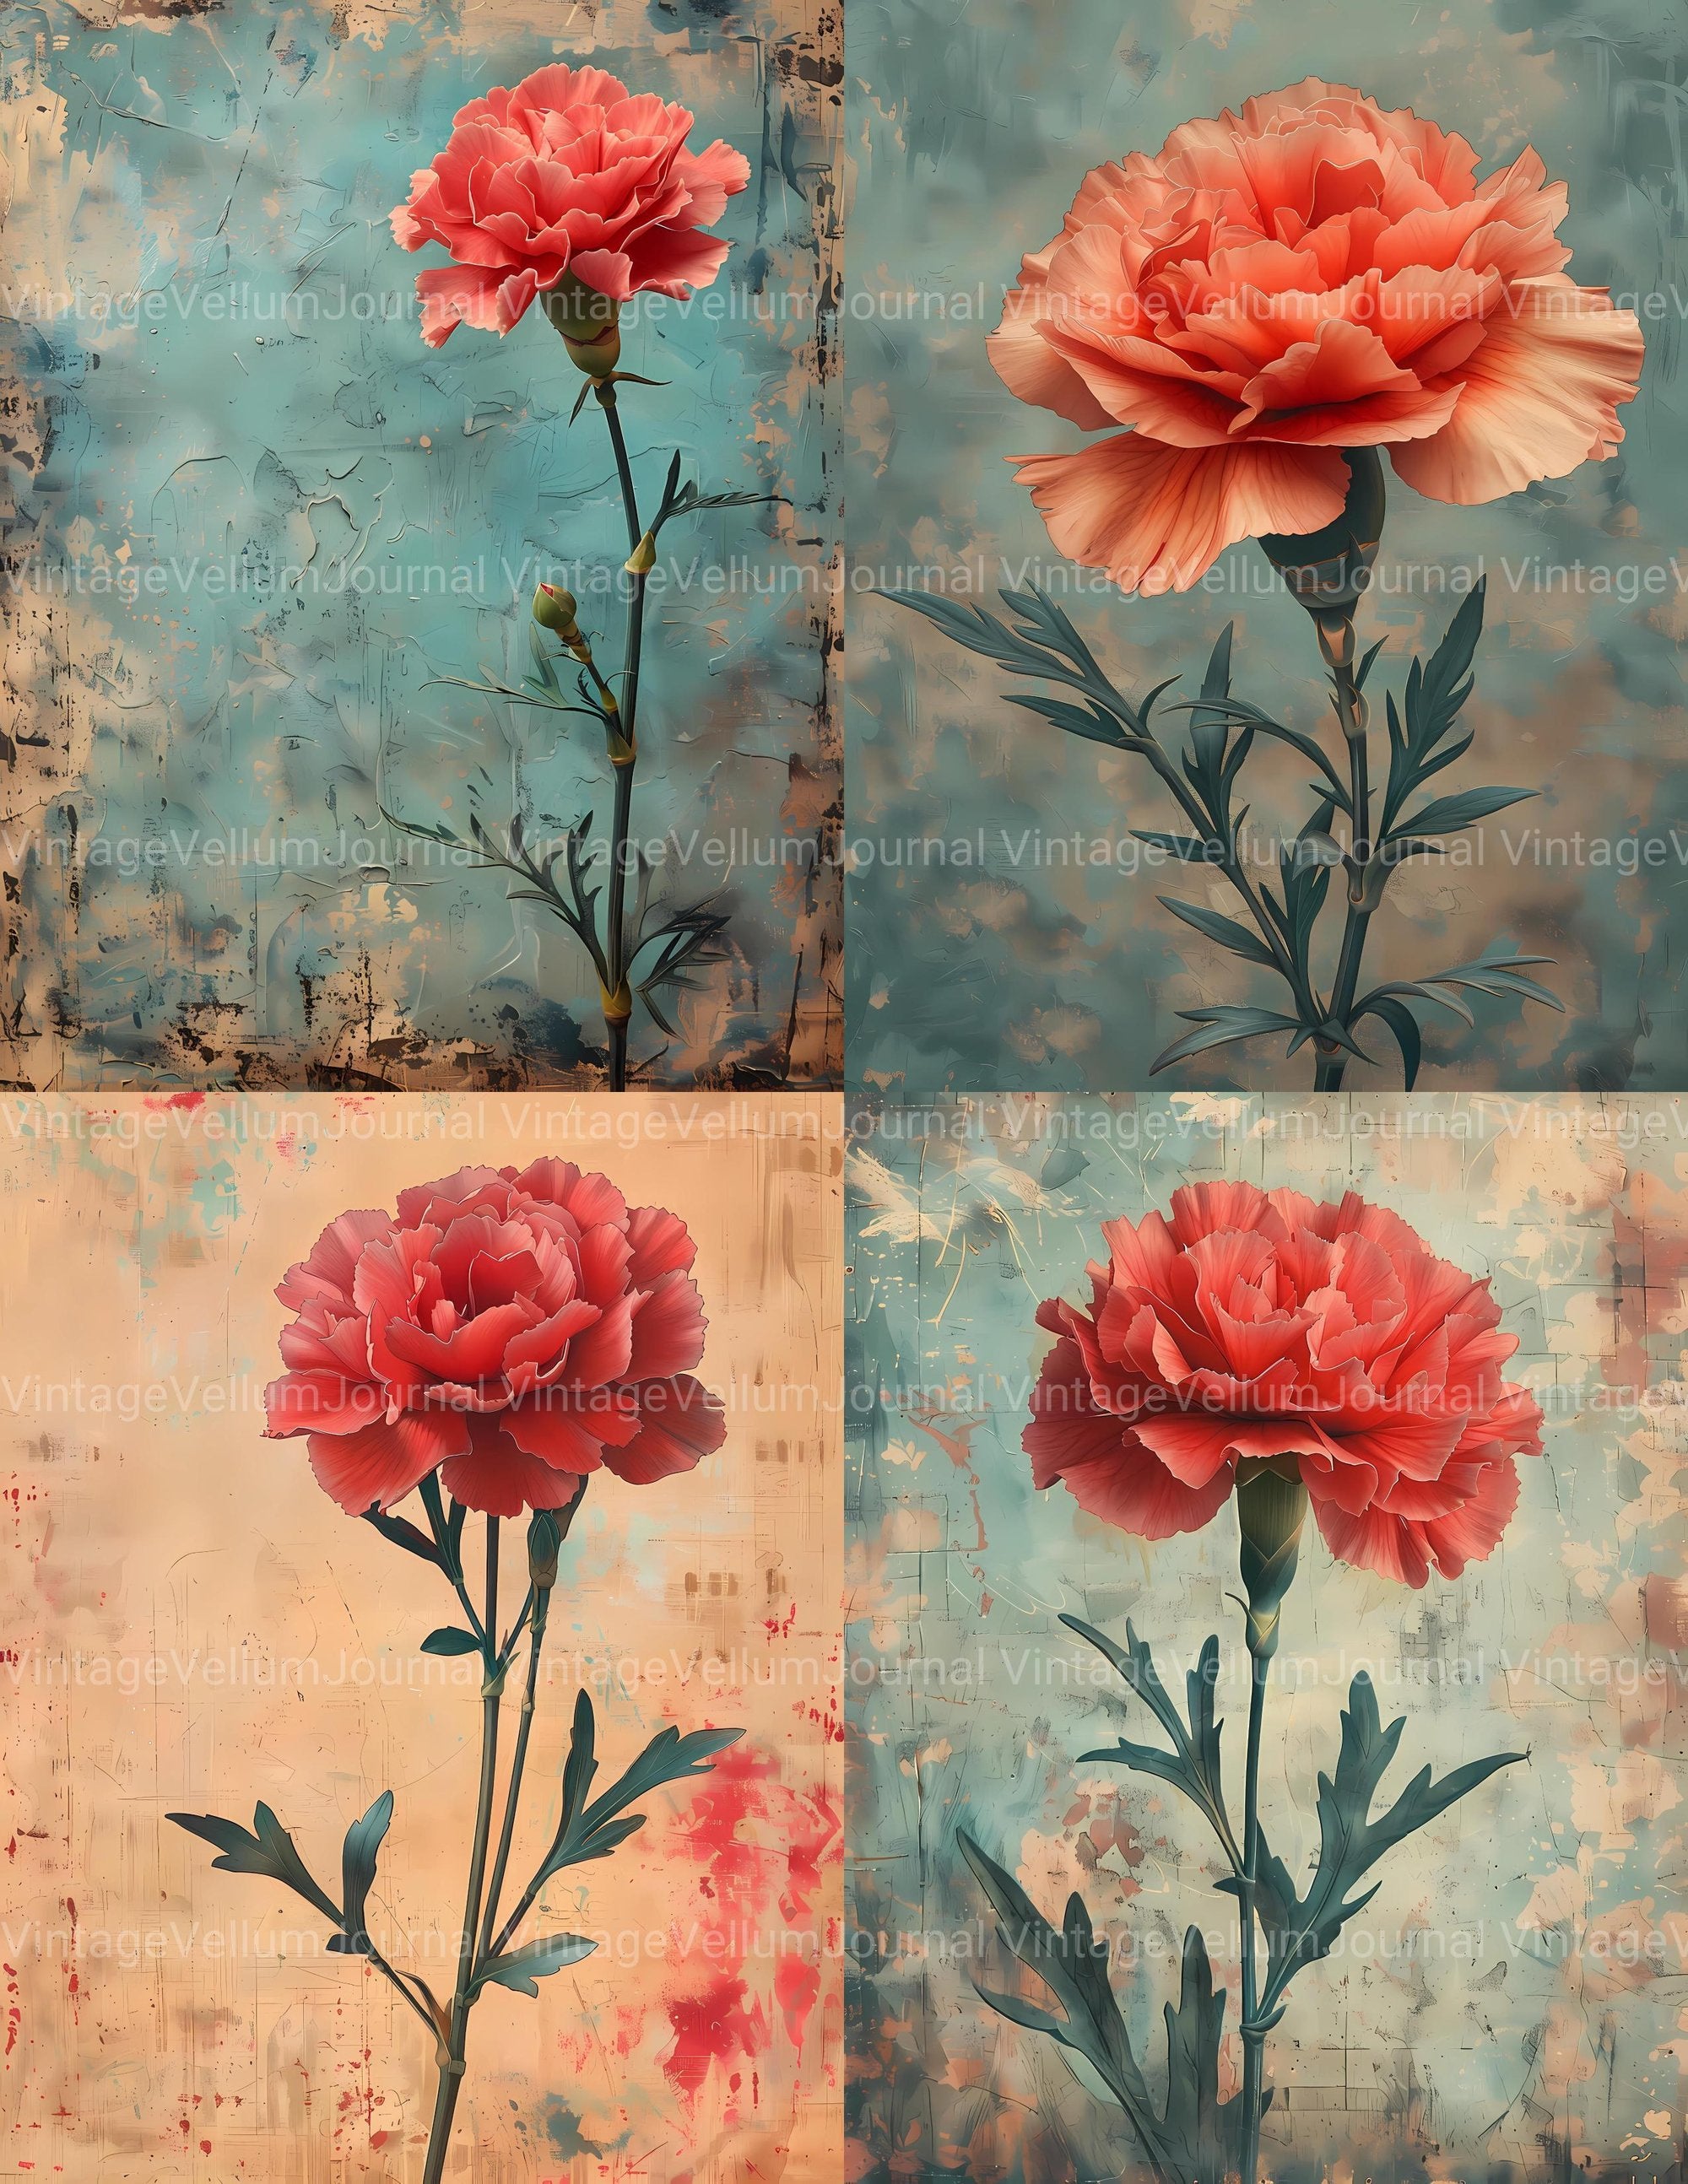 Carnations Flowers Junk Journal Pages - CraftNest